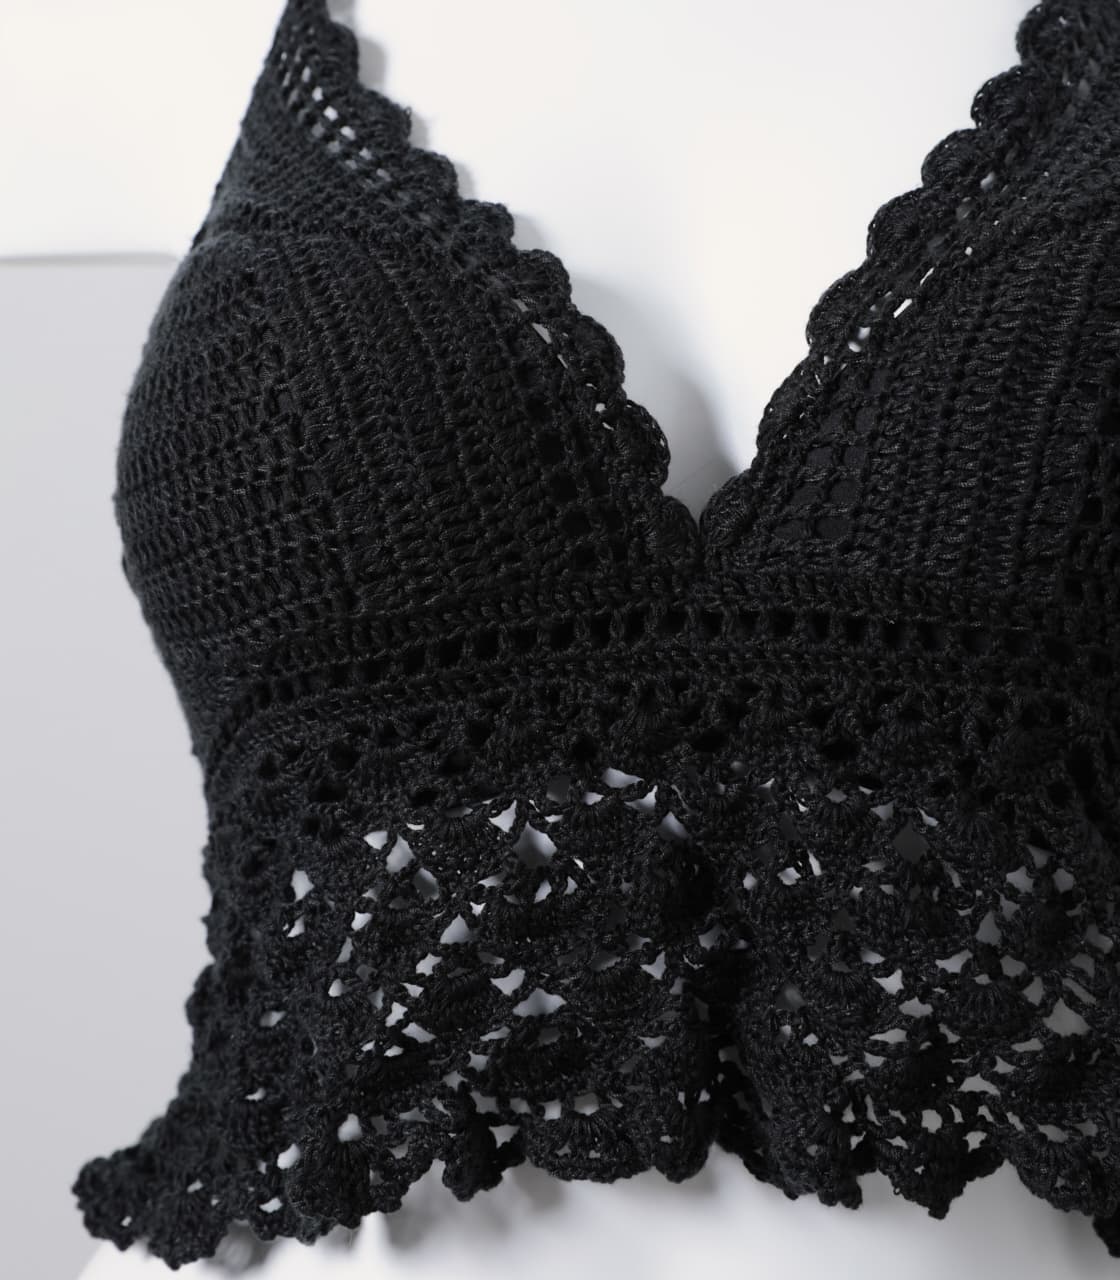 Crochet peplum wire cup bikini